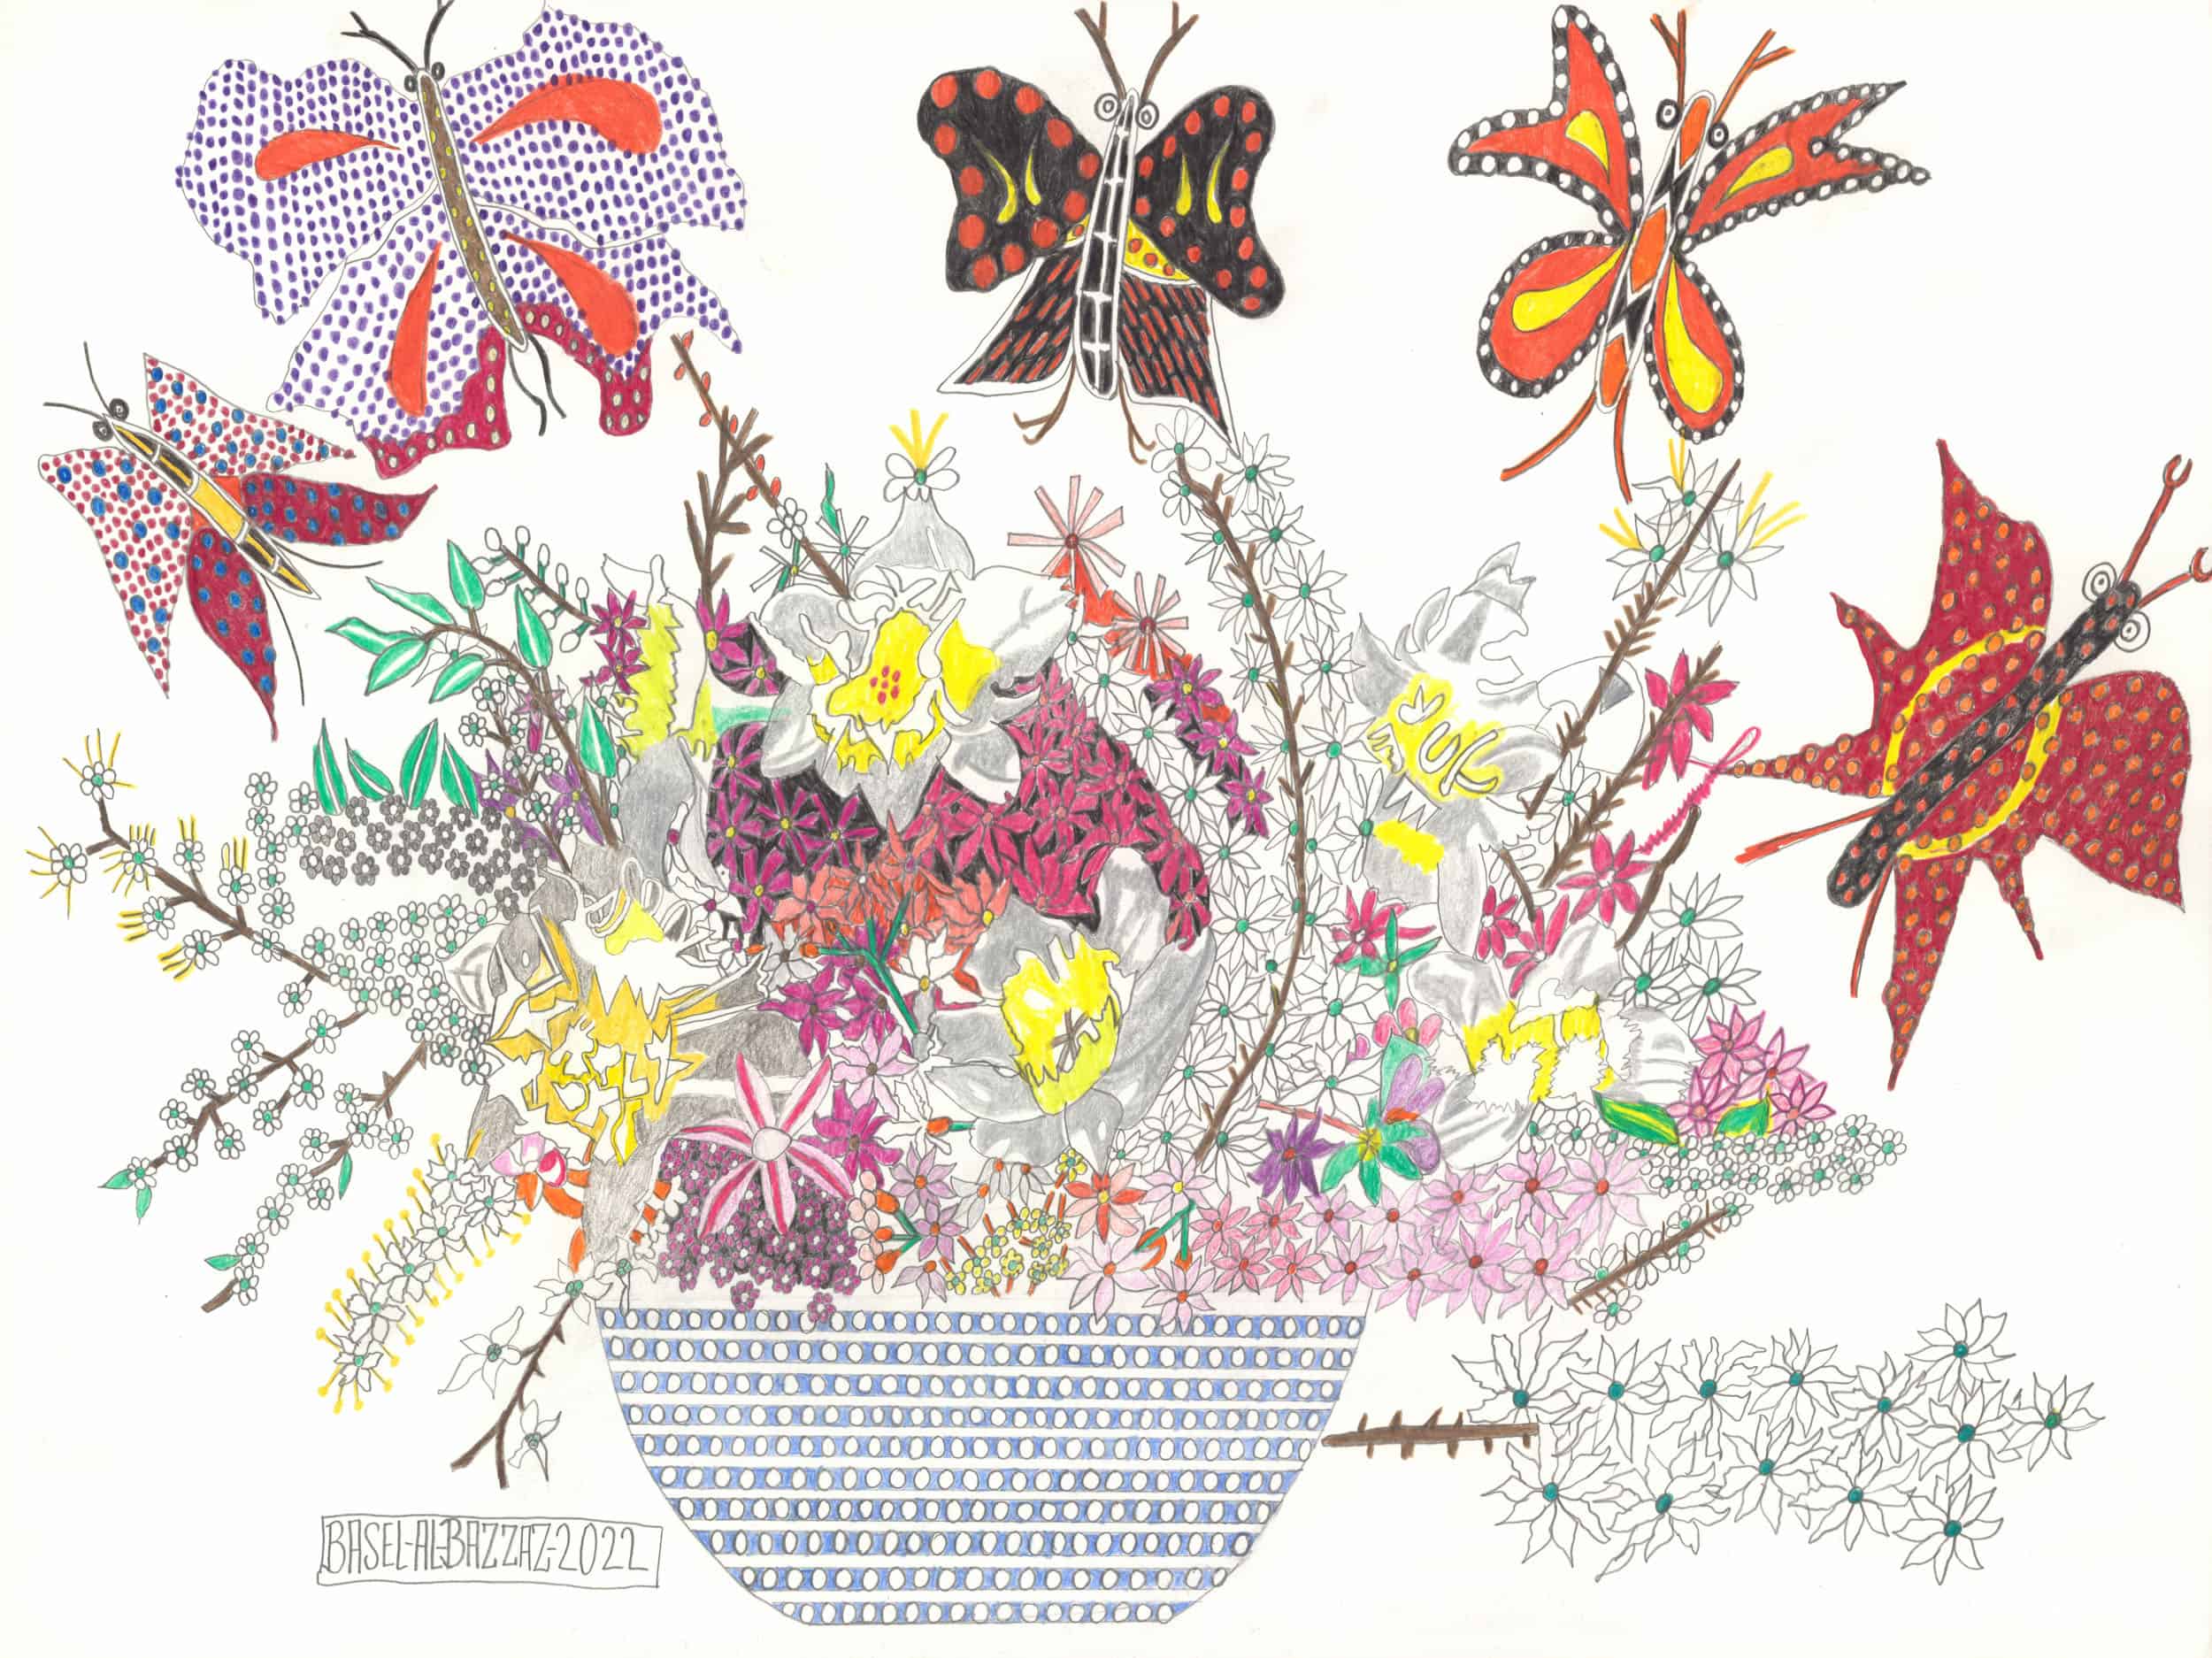 al-bazzaz basel - Blumen und Schmetterlinge aus Holland / Flowers and butterflies from Holland